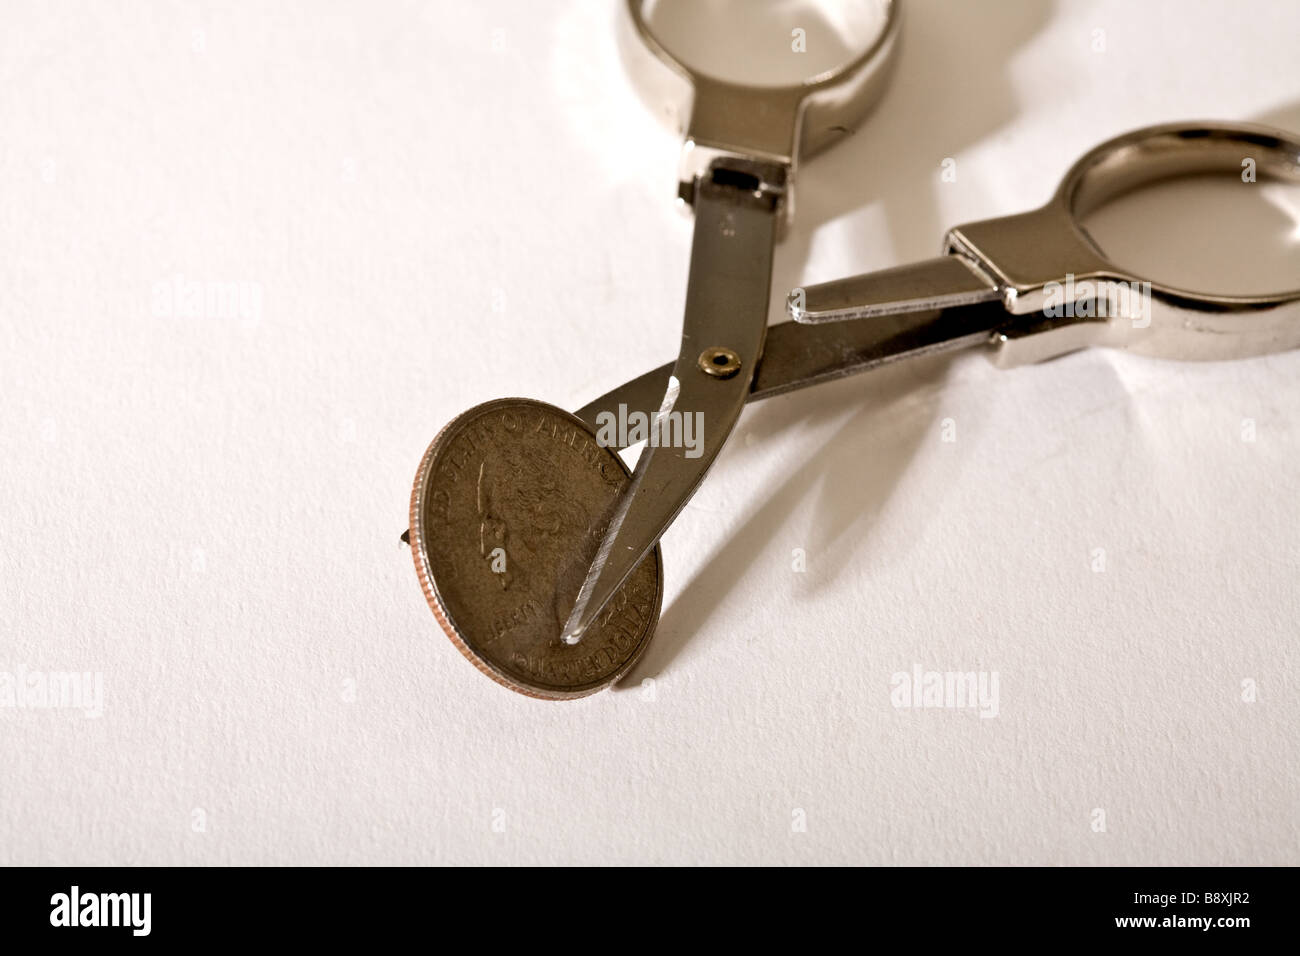 Small scissors cutting into a American quarter coin Stock Photo